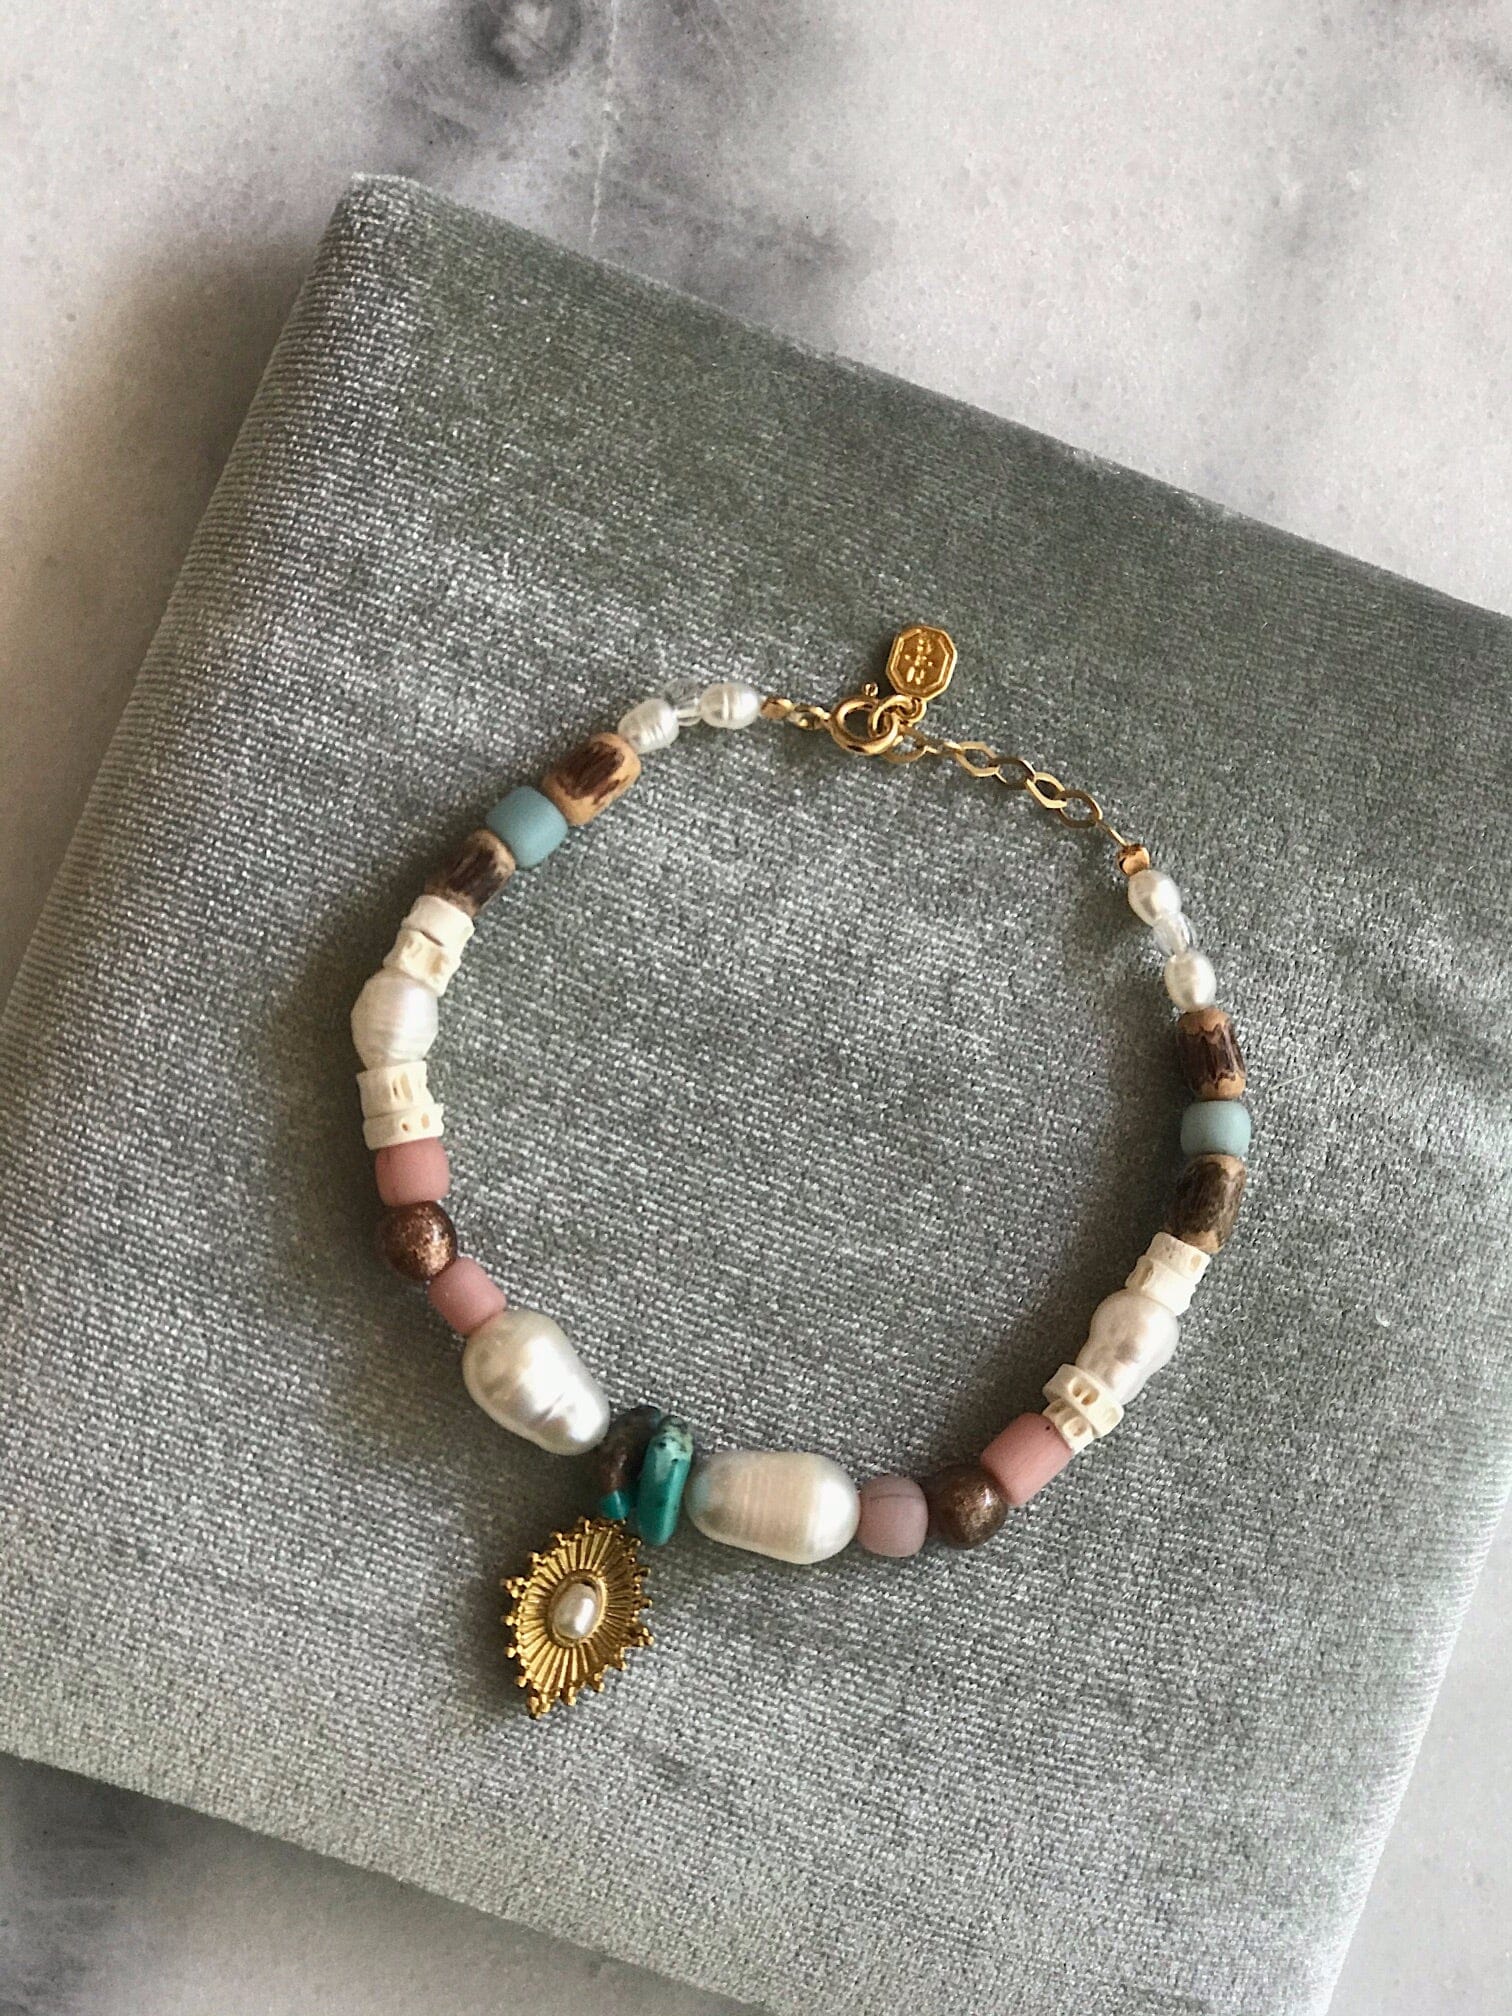  stunning  simple  silver  rings  pink  pearls  locker  jewelry  jewellery  cute  crystal  chic  ceramic  bracelet  bijoux  beads